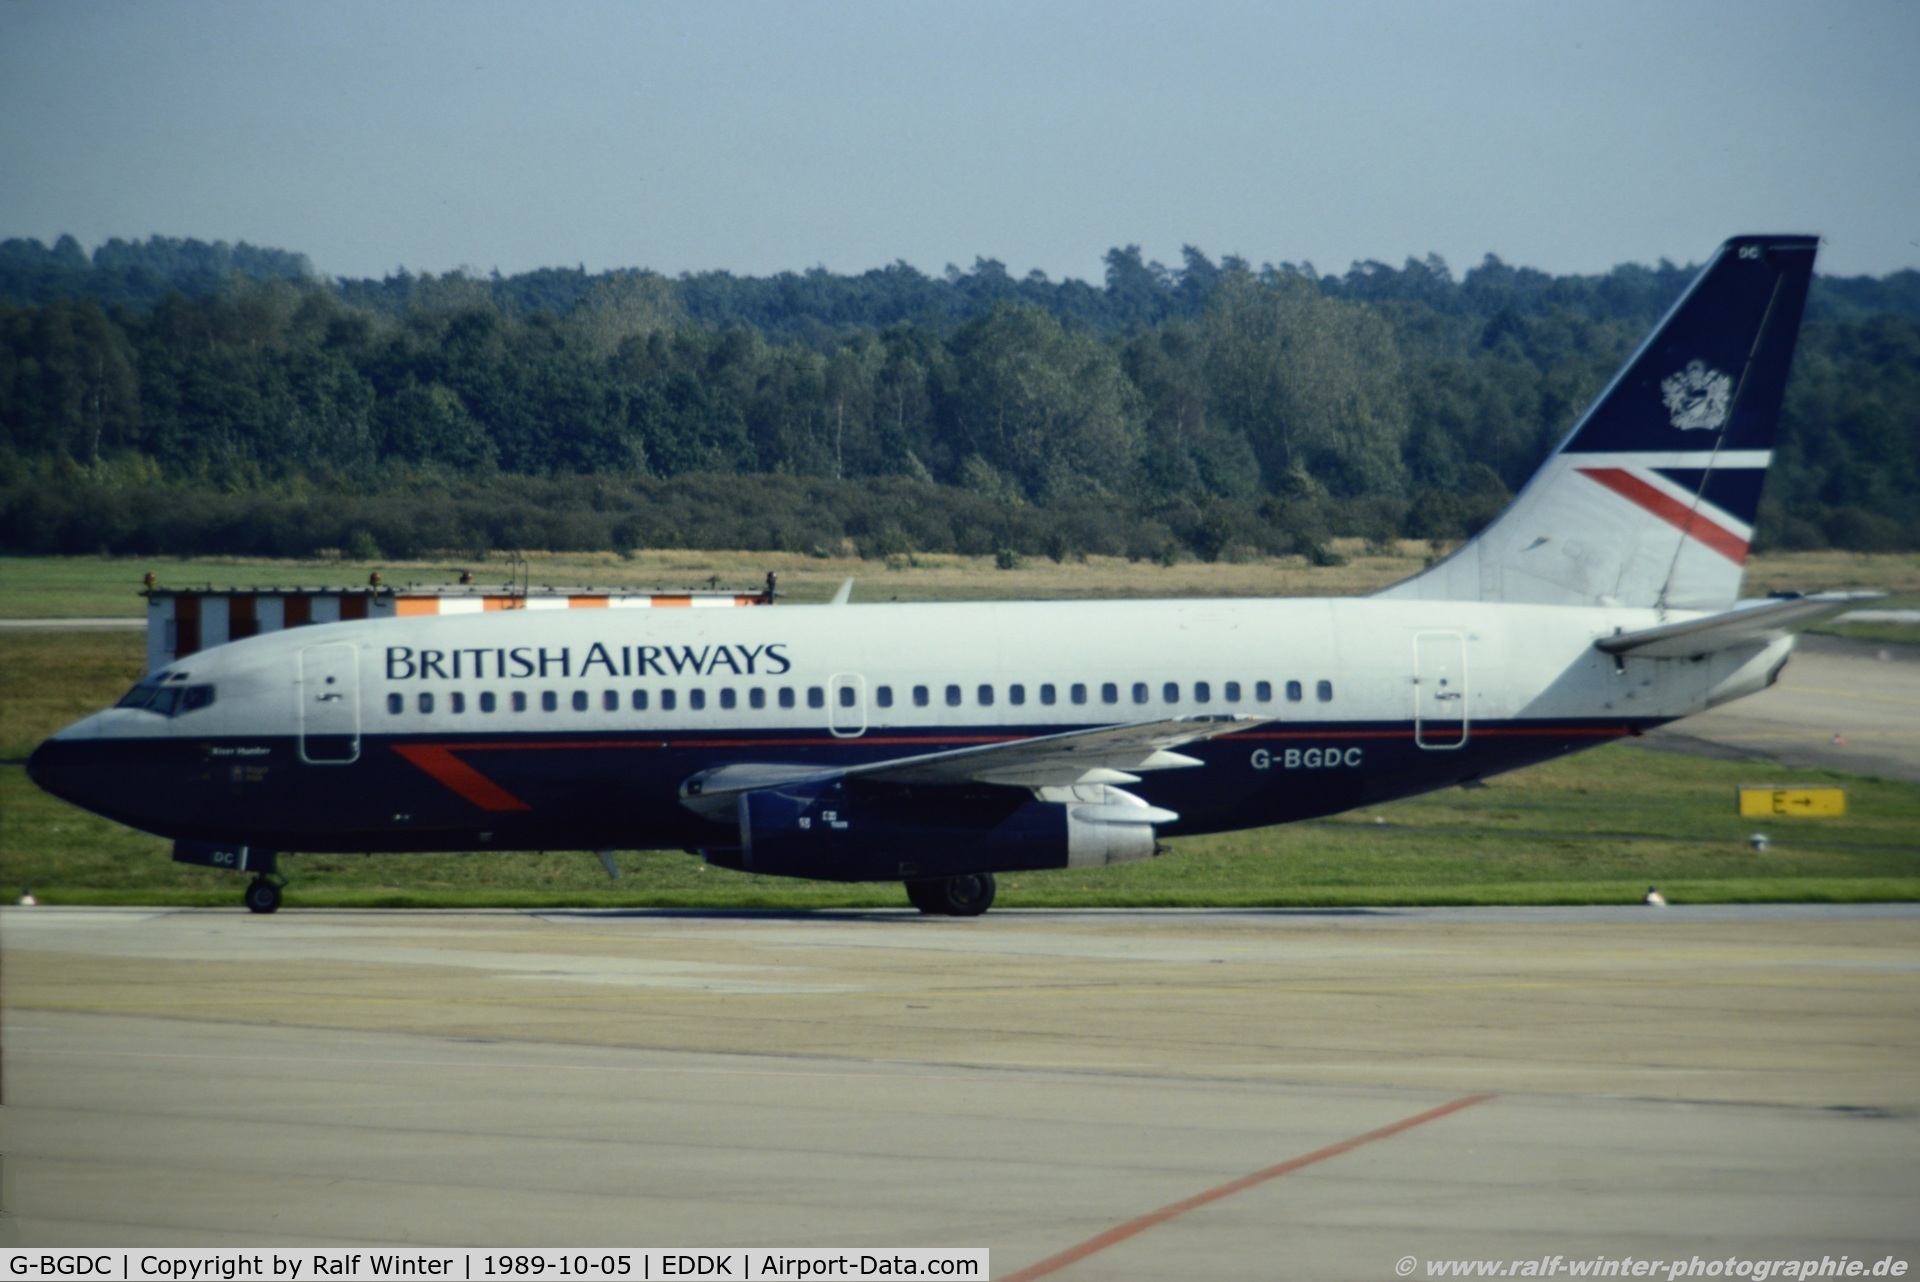 G-BGDC, 1979 Boeing 737-236 C/N 21792, Boeing 737-236 - BA BAW British Airways 'River Humber' - 21792 - G-BGDC - 05.10.1989 - CGN